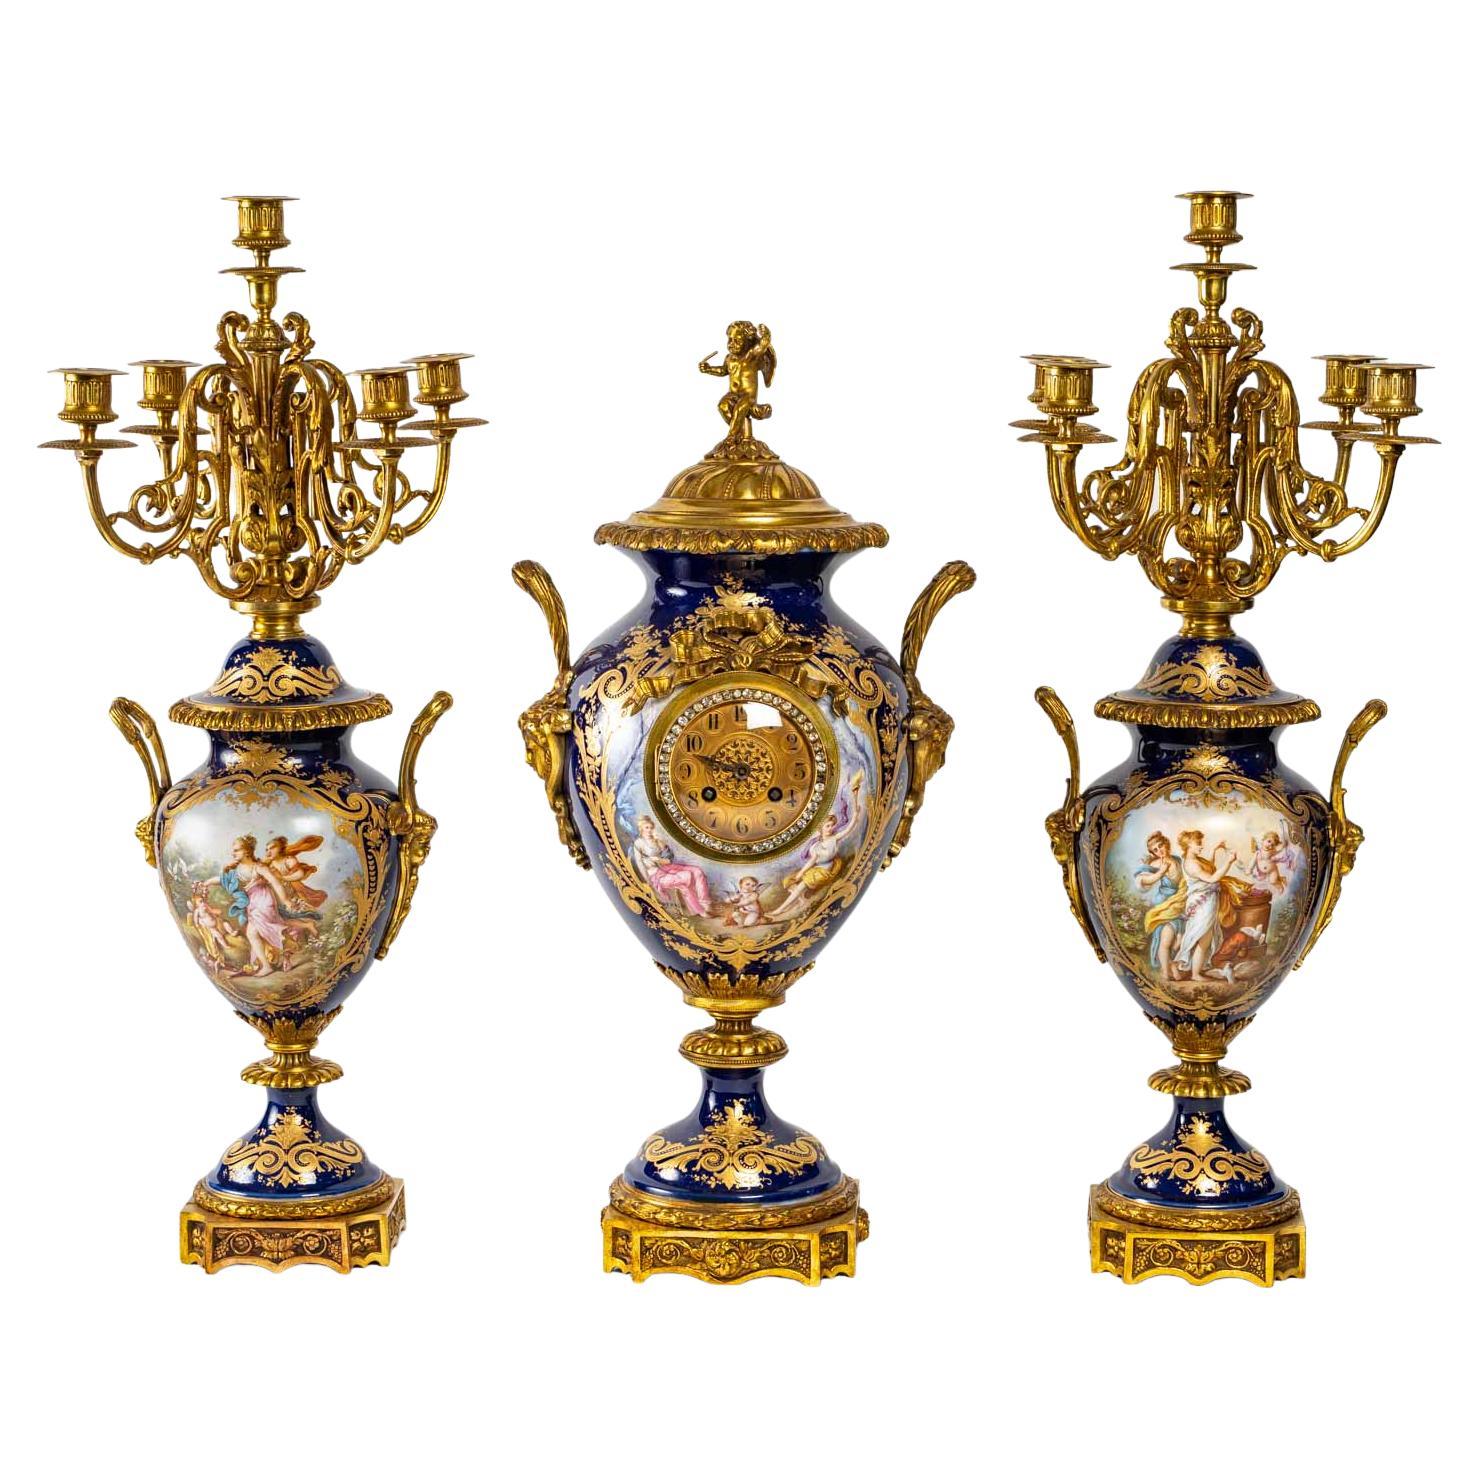 Napoleon III Period Gilt Bronze Porcelain Mantelpiece